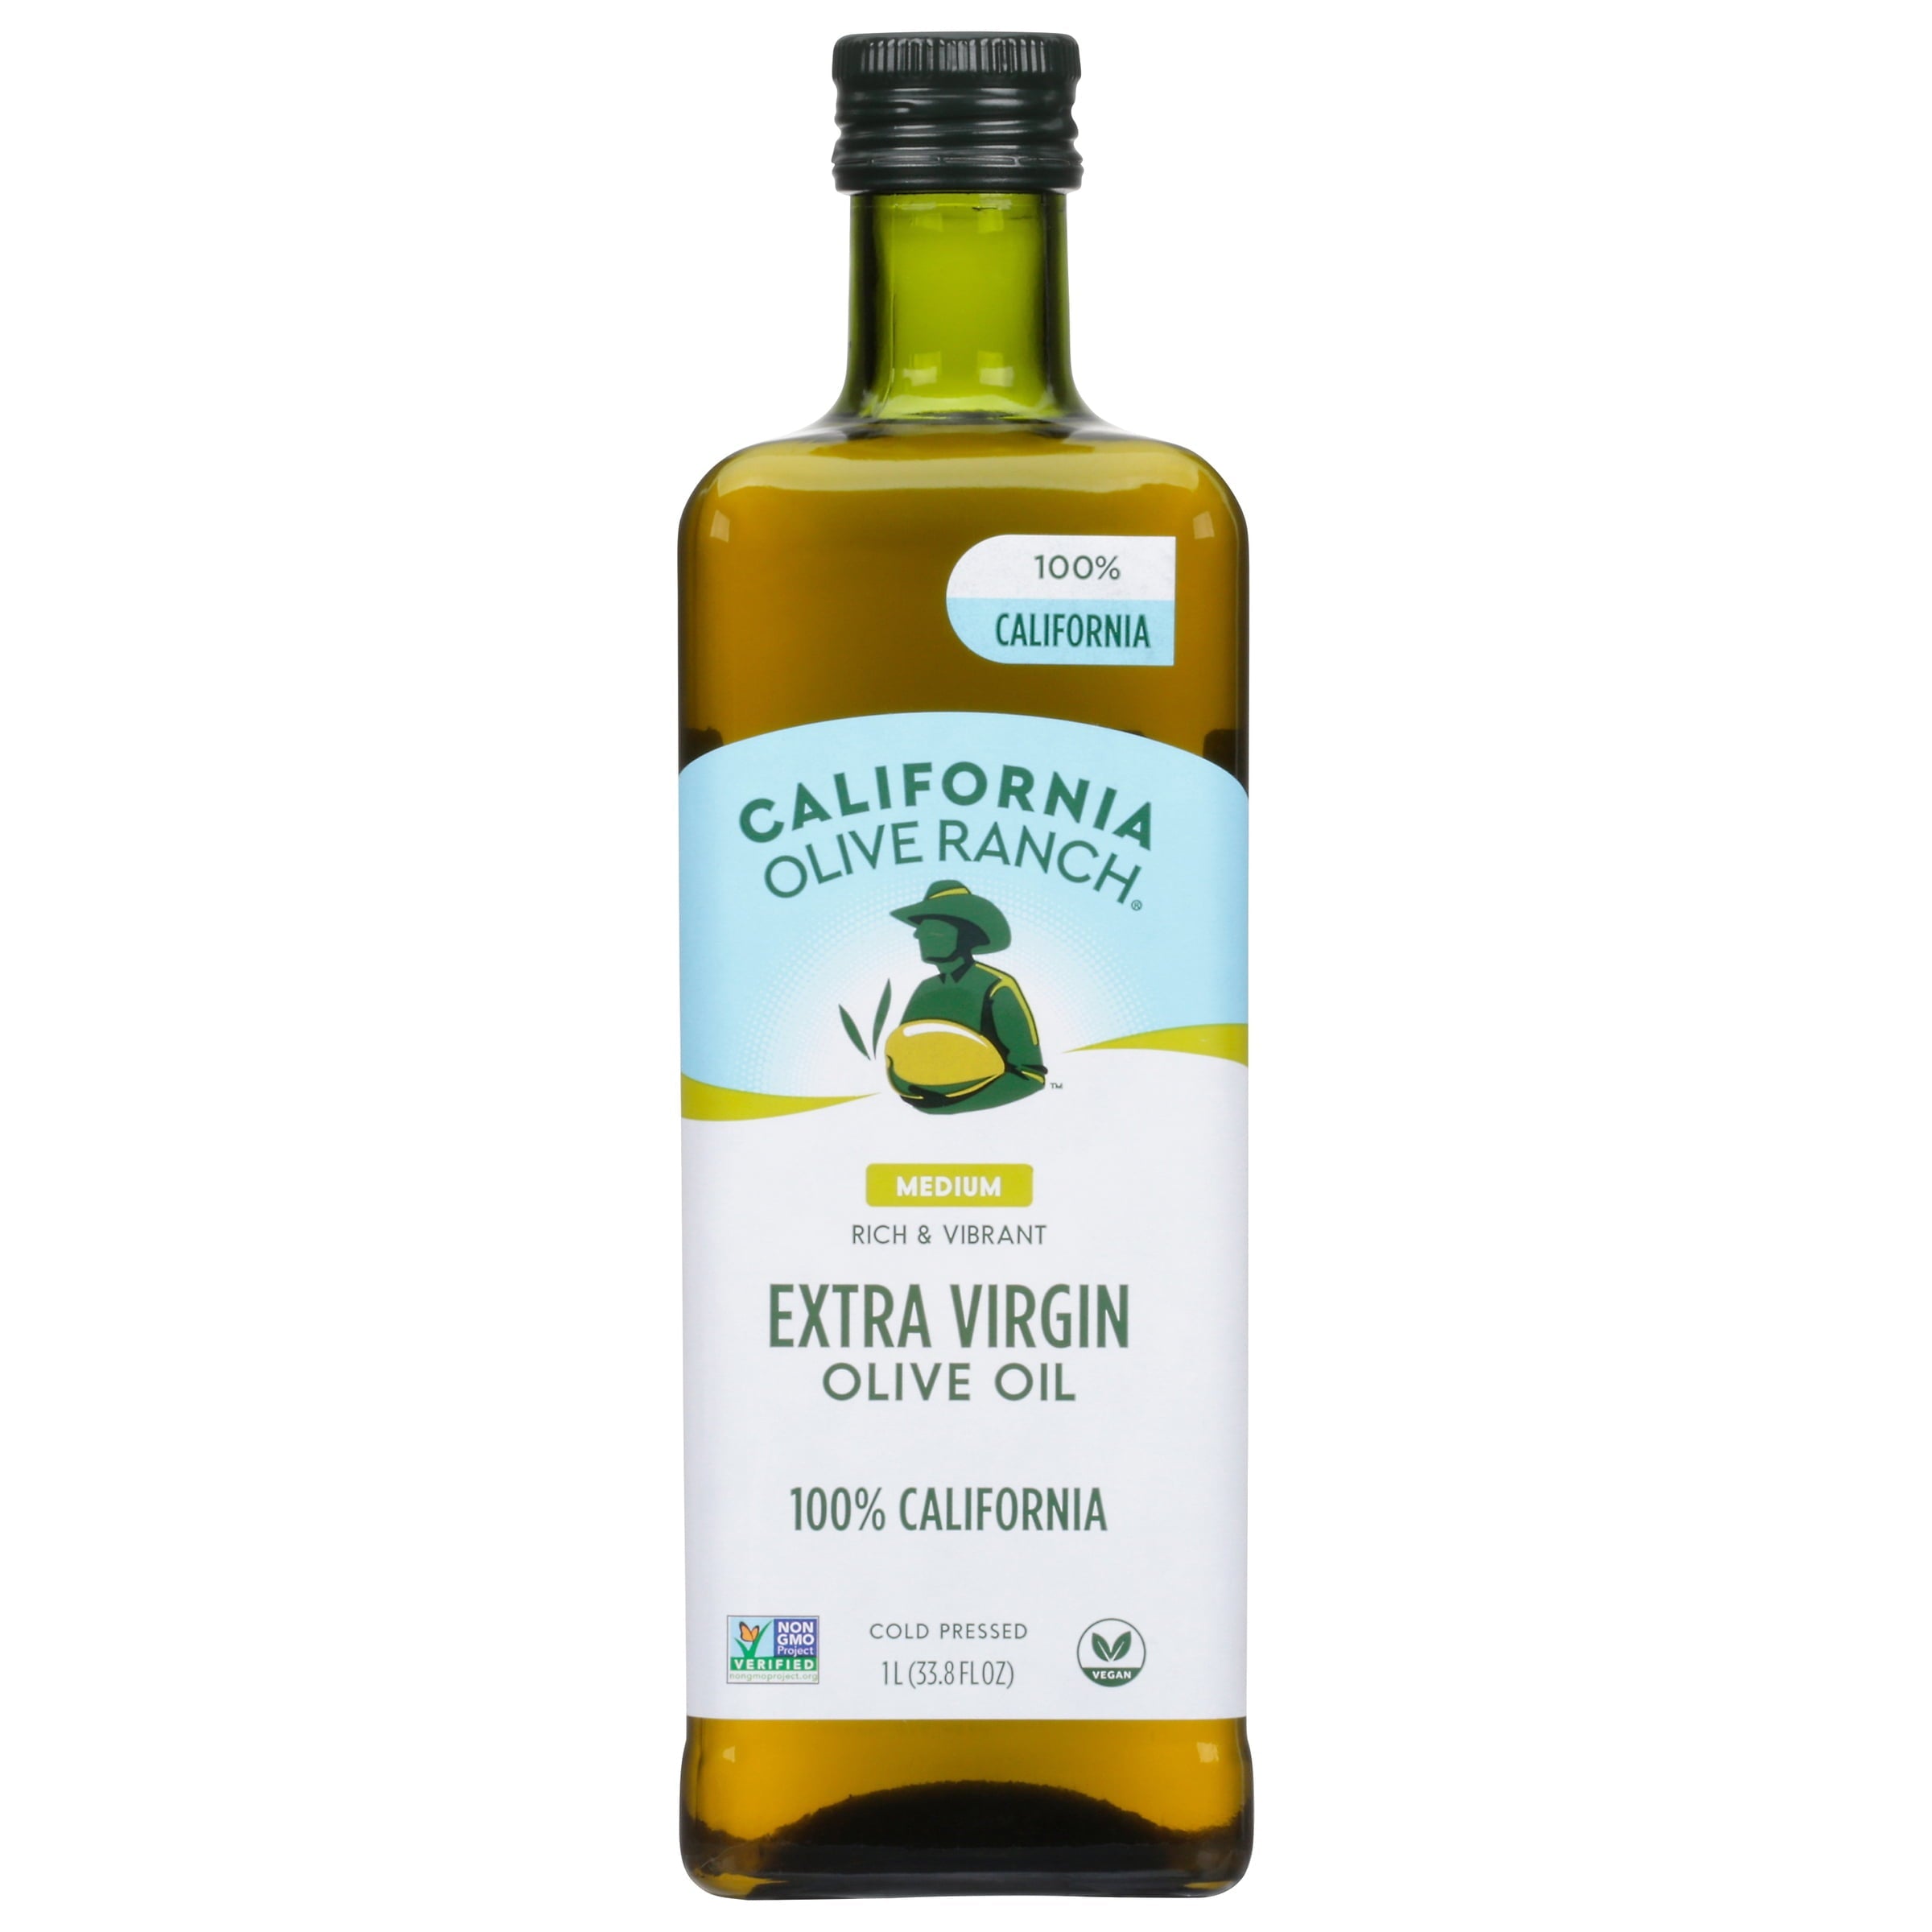 California Olive Ranch 100% California Rich & Vibrant Extra Virgin Olive Oil 33.8 oz Bottle